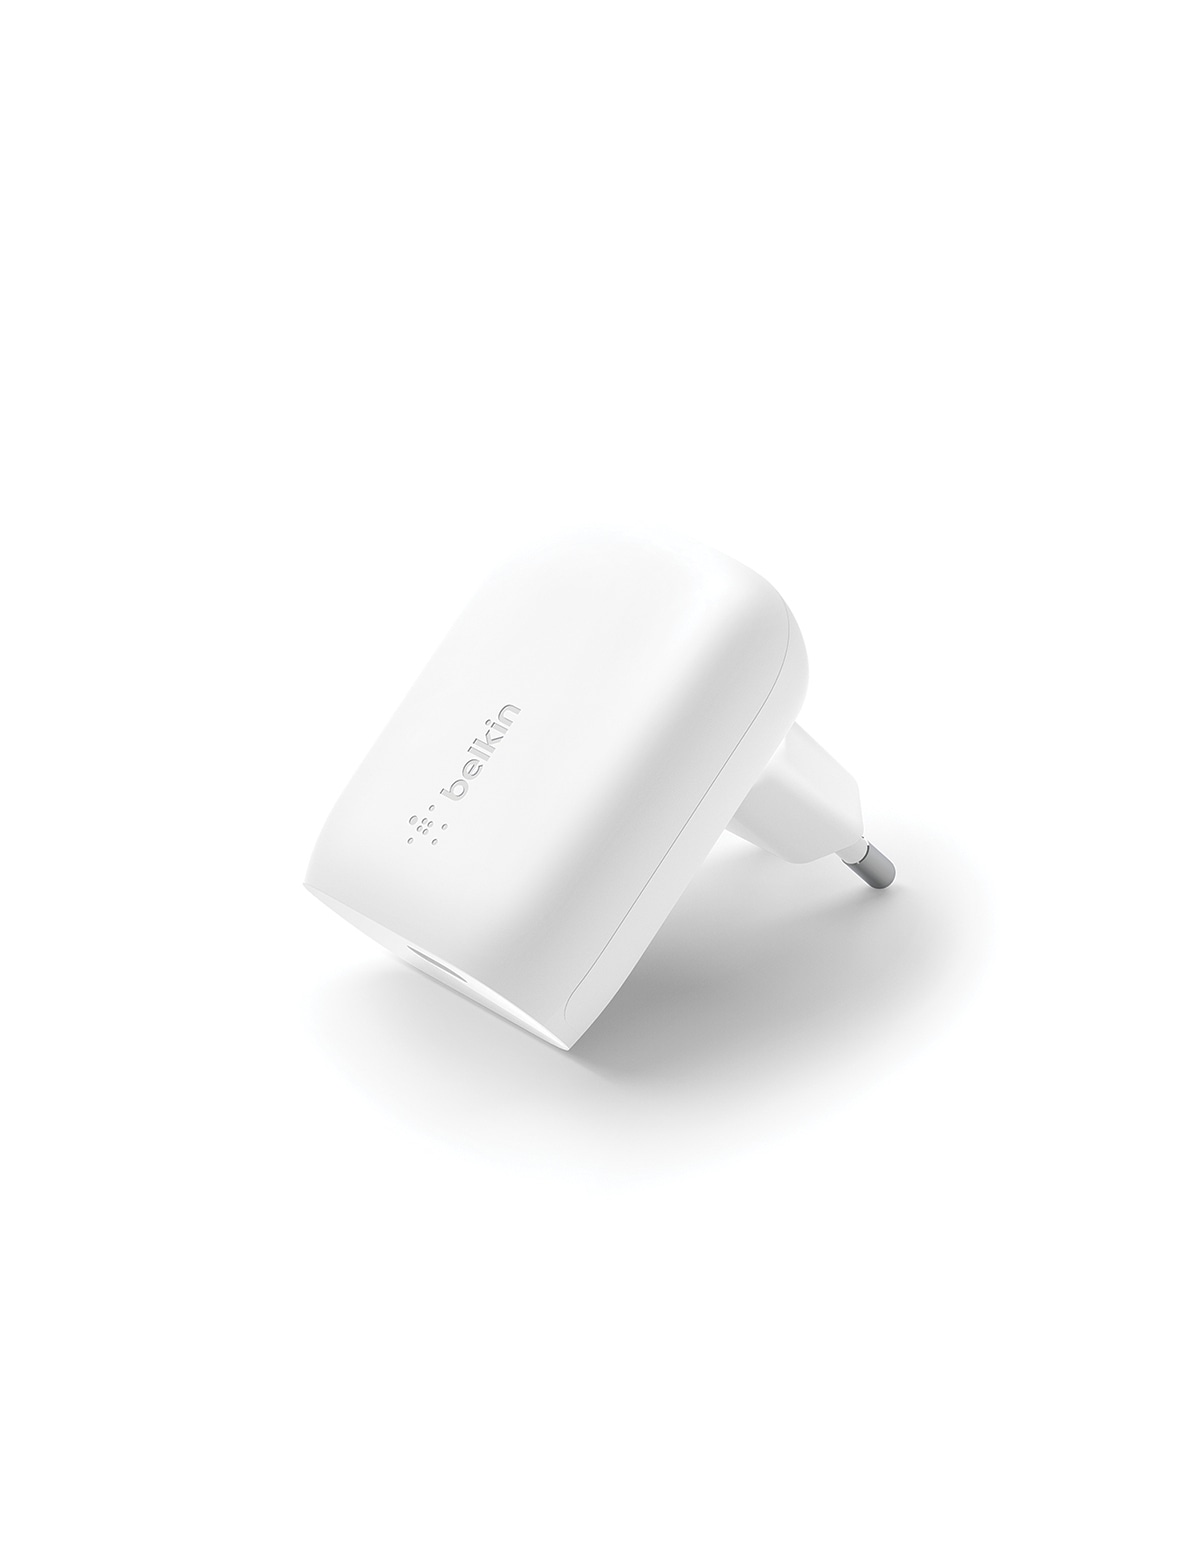 Belkin USB-Ladegerät »BoostCharge 30 Watt USB-C Ladegerät mit Power Delivery 3.0«, (Charger/Netzteil für iPhone, iPad, Samsung Galaxy/Note, Google Pixel)